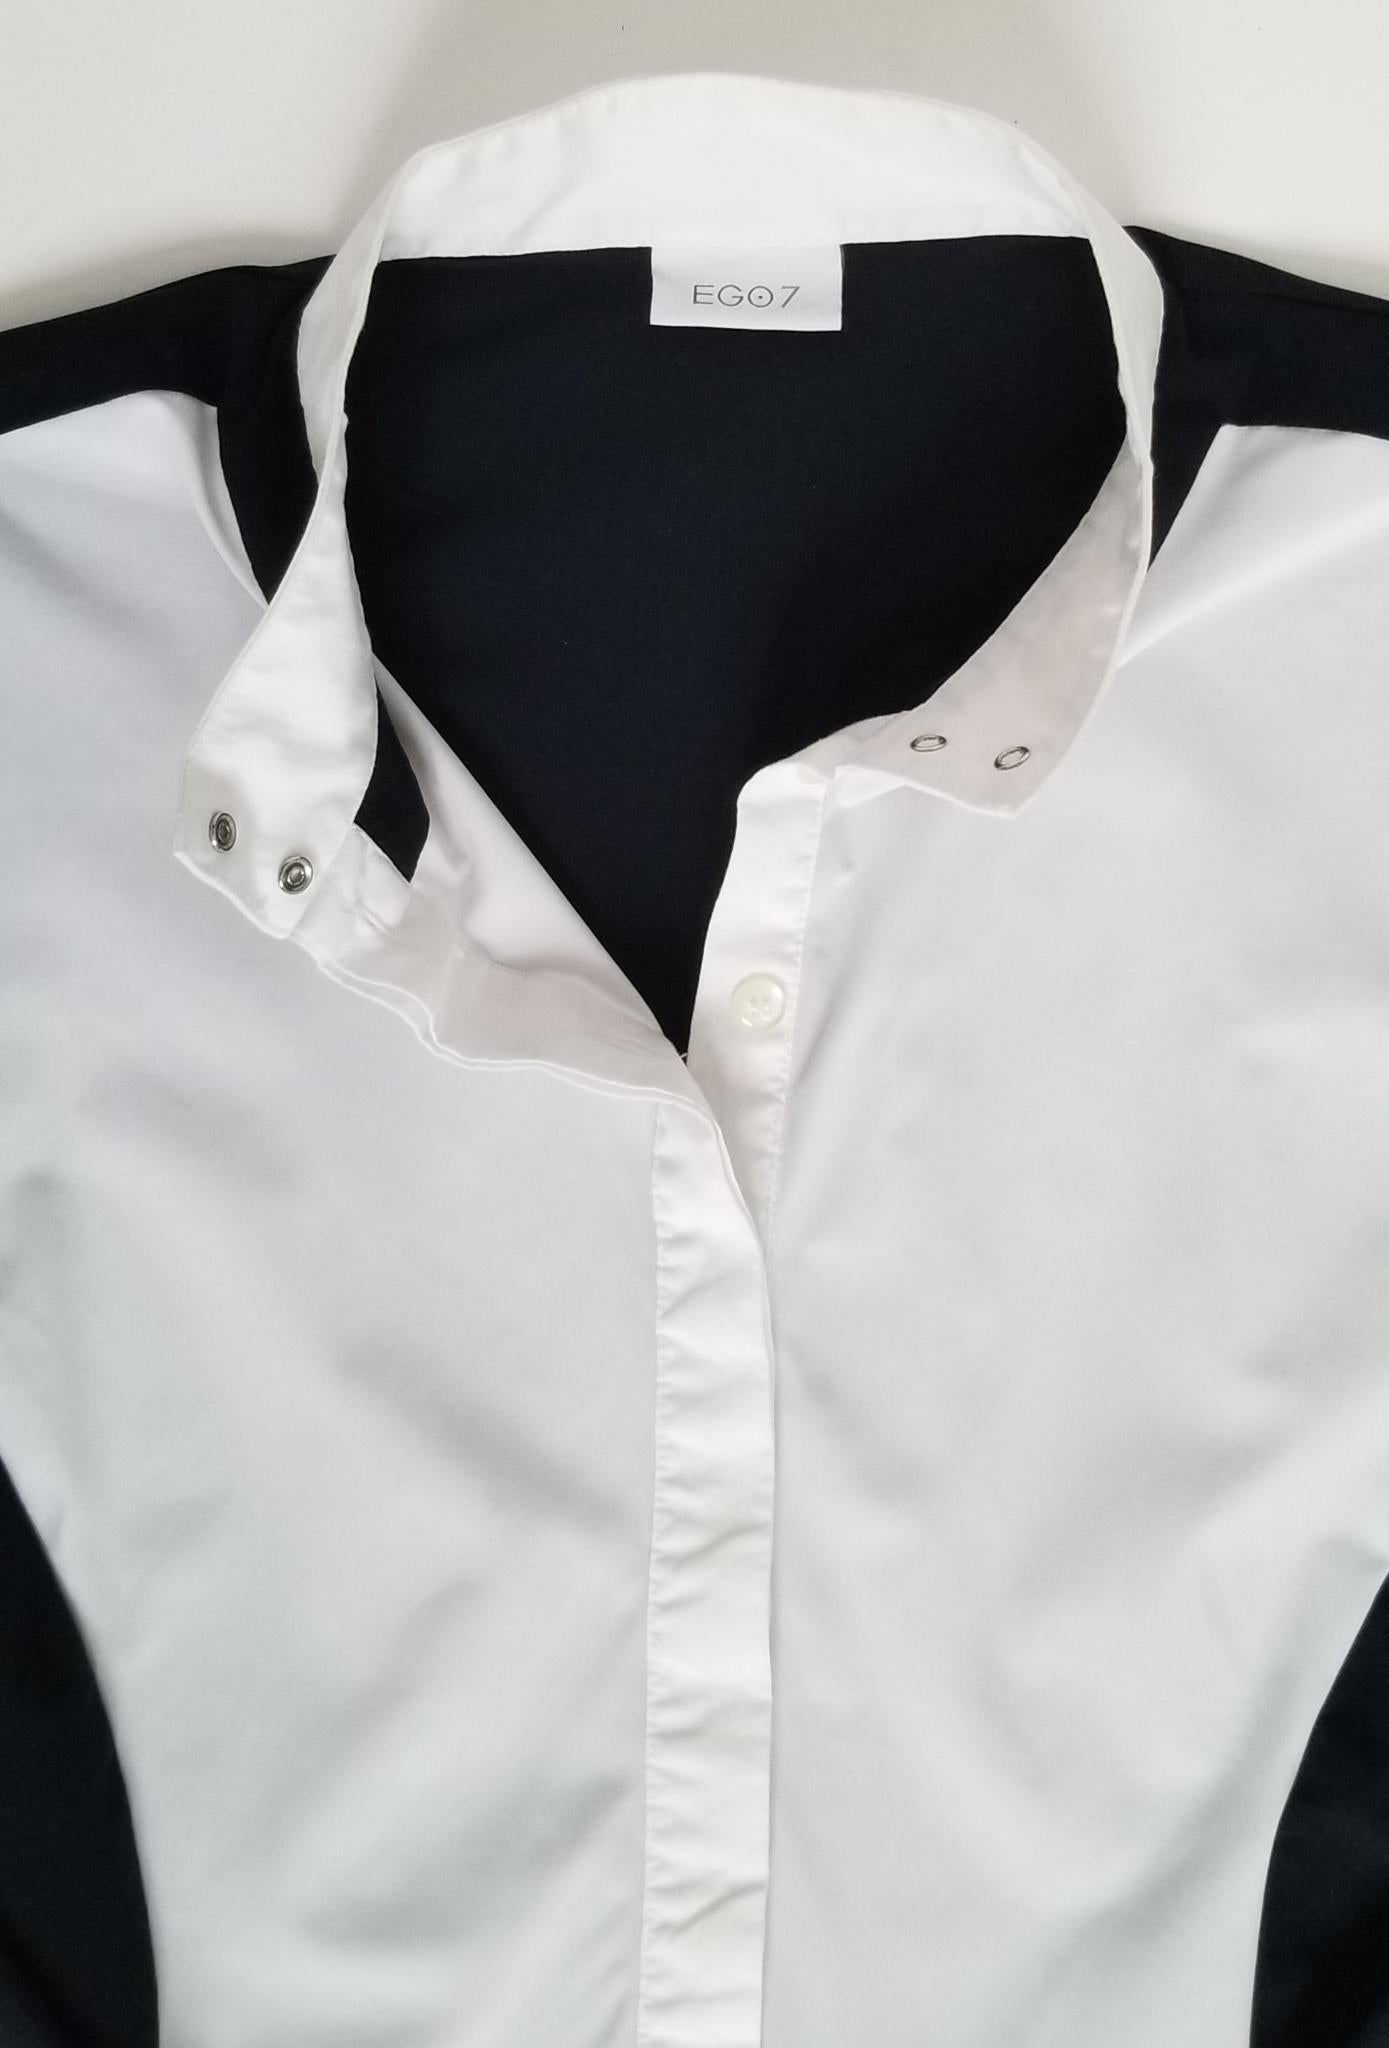 Ego7 Long Sleeve Show Shirt - Black - Women's Size 8 (Small)